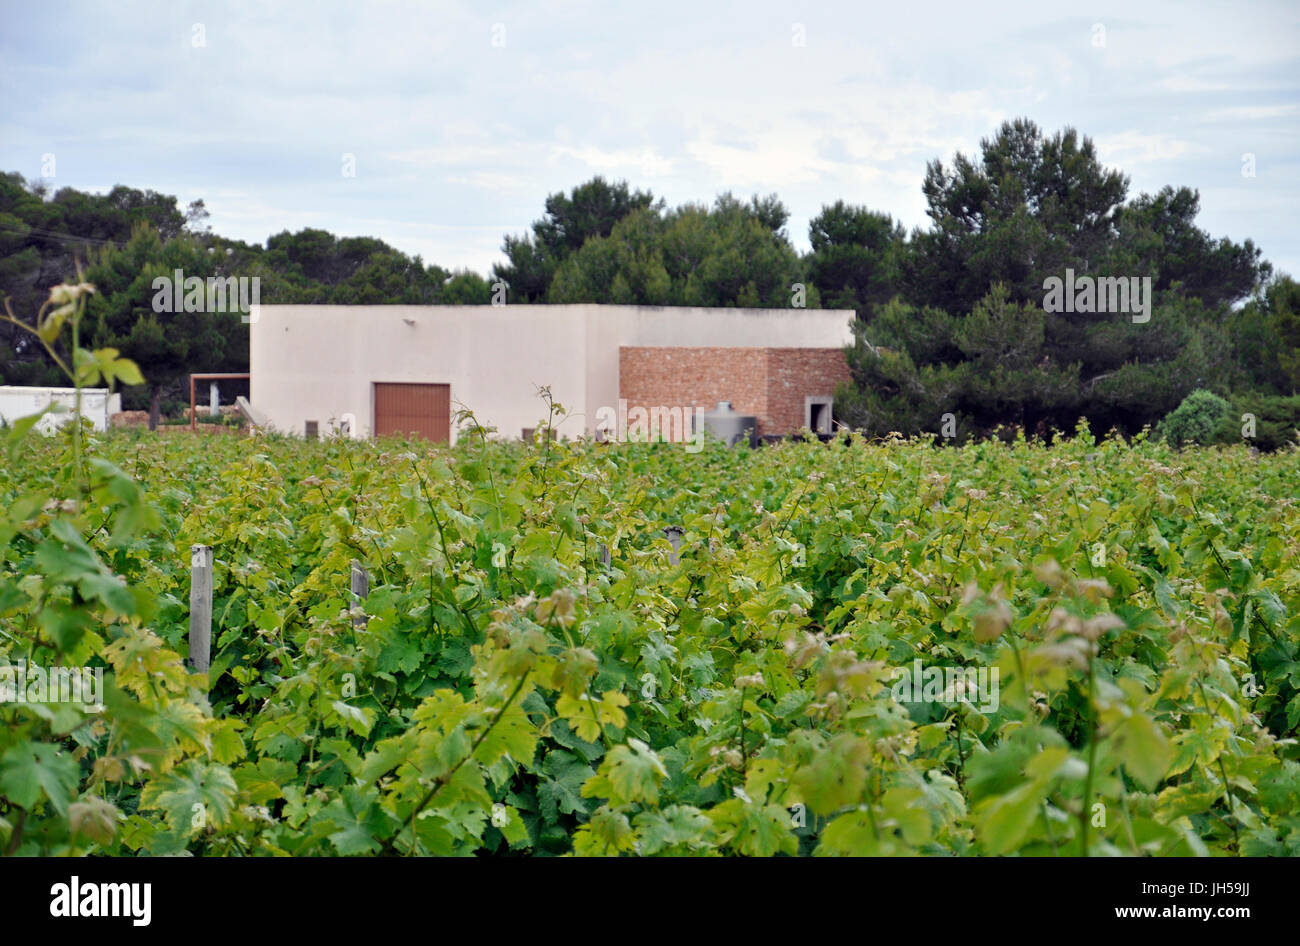 Bodegas Terramoll winery facilities surrounded by grapevine (Vitis vinifera) vineyards at La Mola (Formentera, Balearic Islands, Spain) Stock Photo